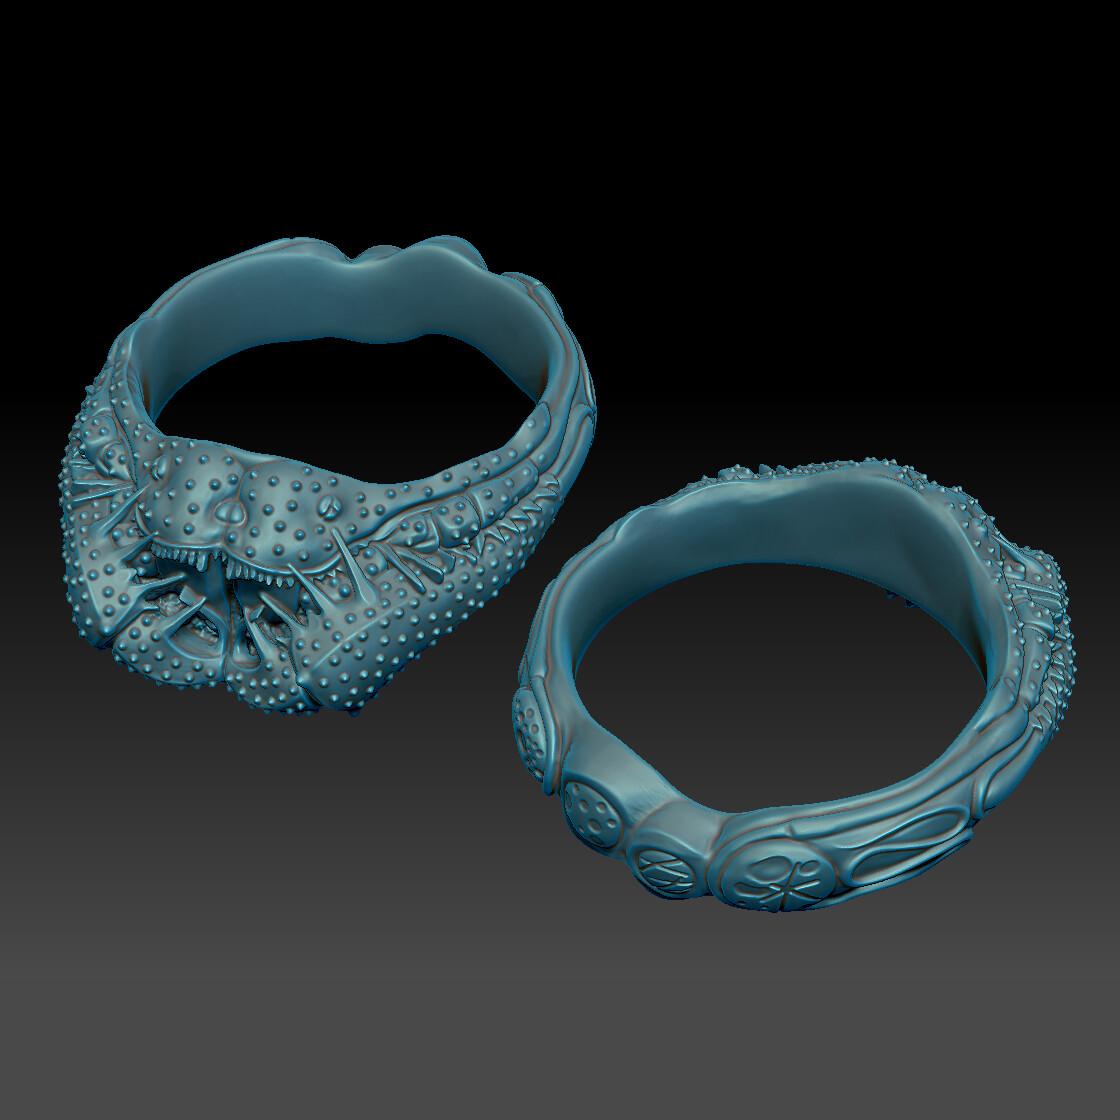 ZBrush render of ring design